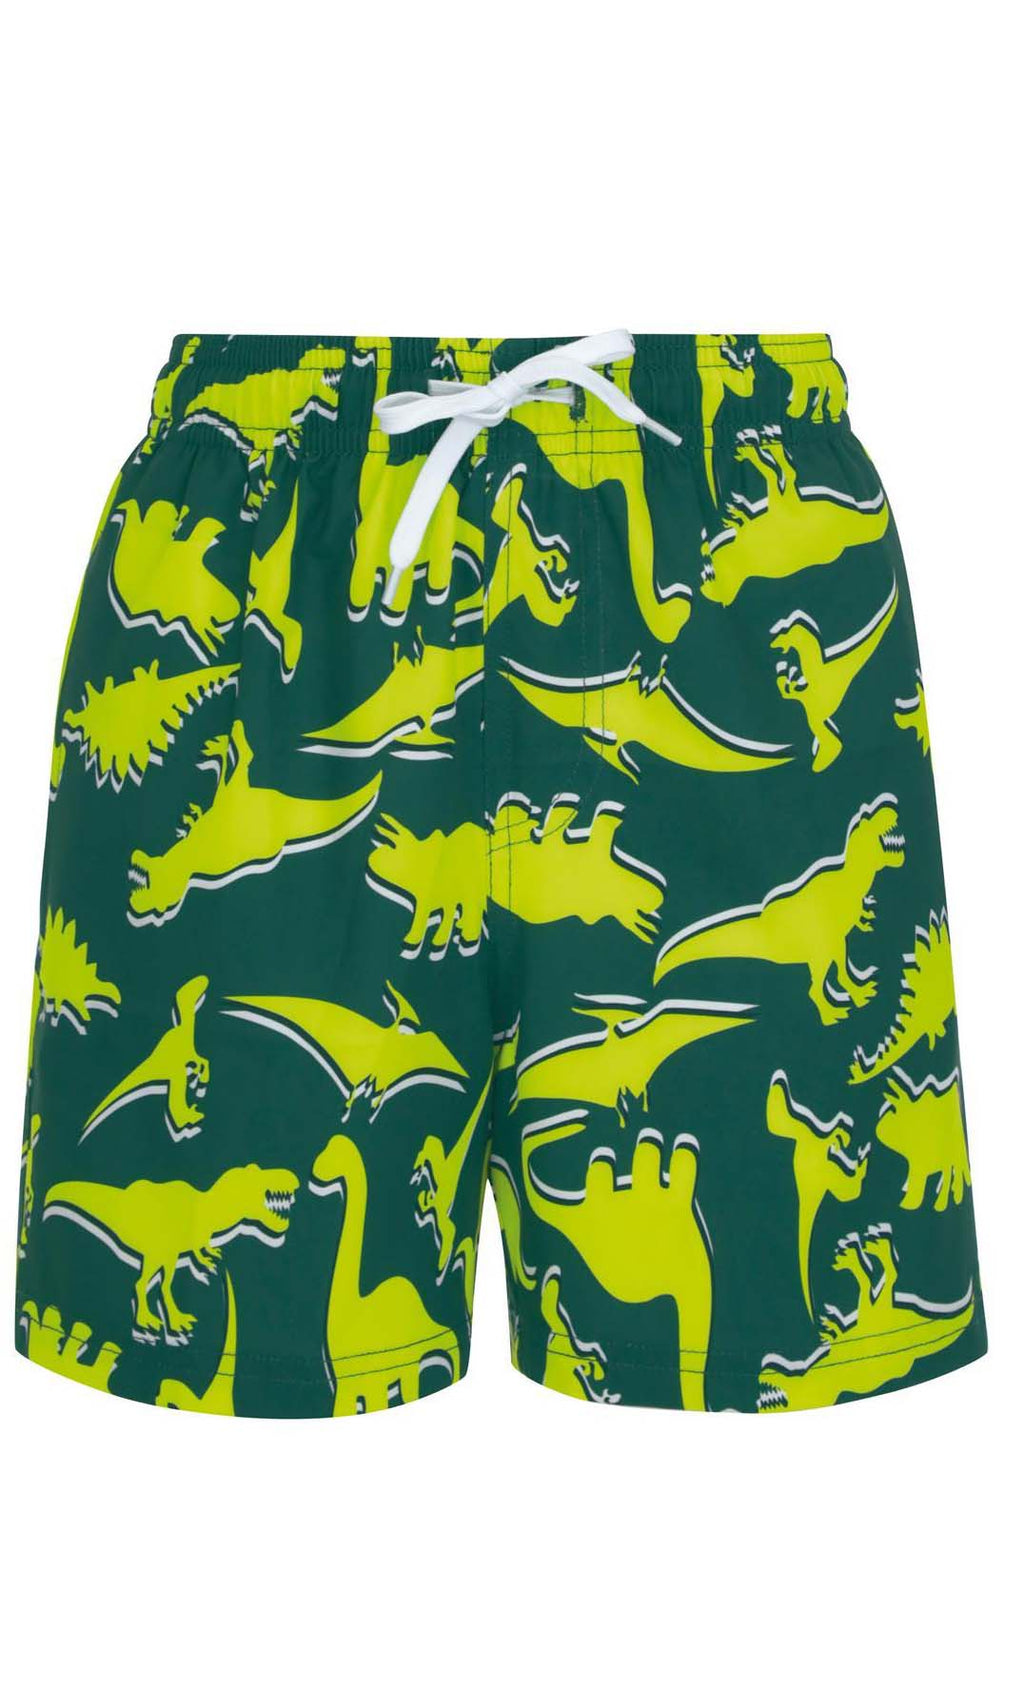 Kids Dinosaur Short, Special Order Size 4-16